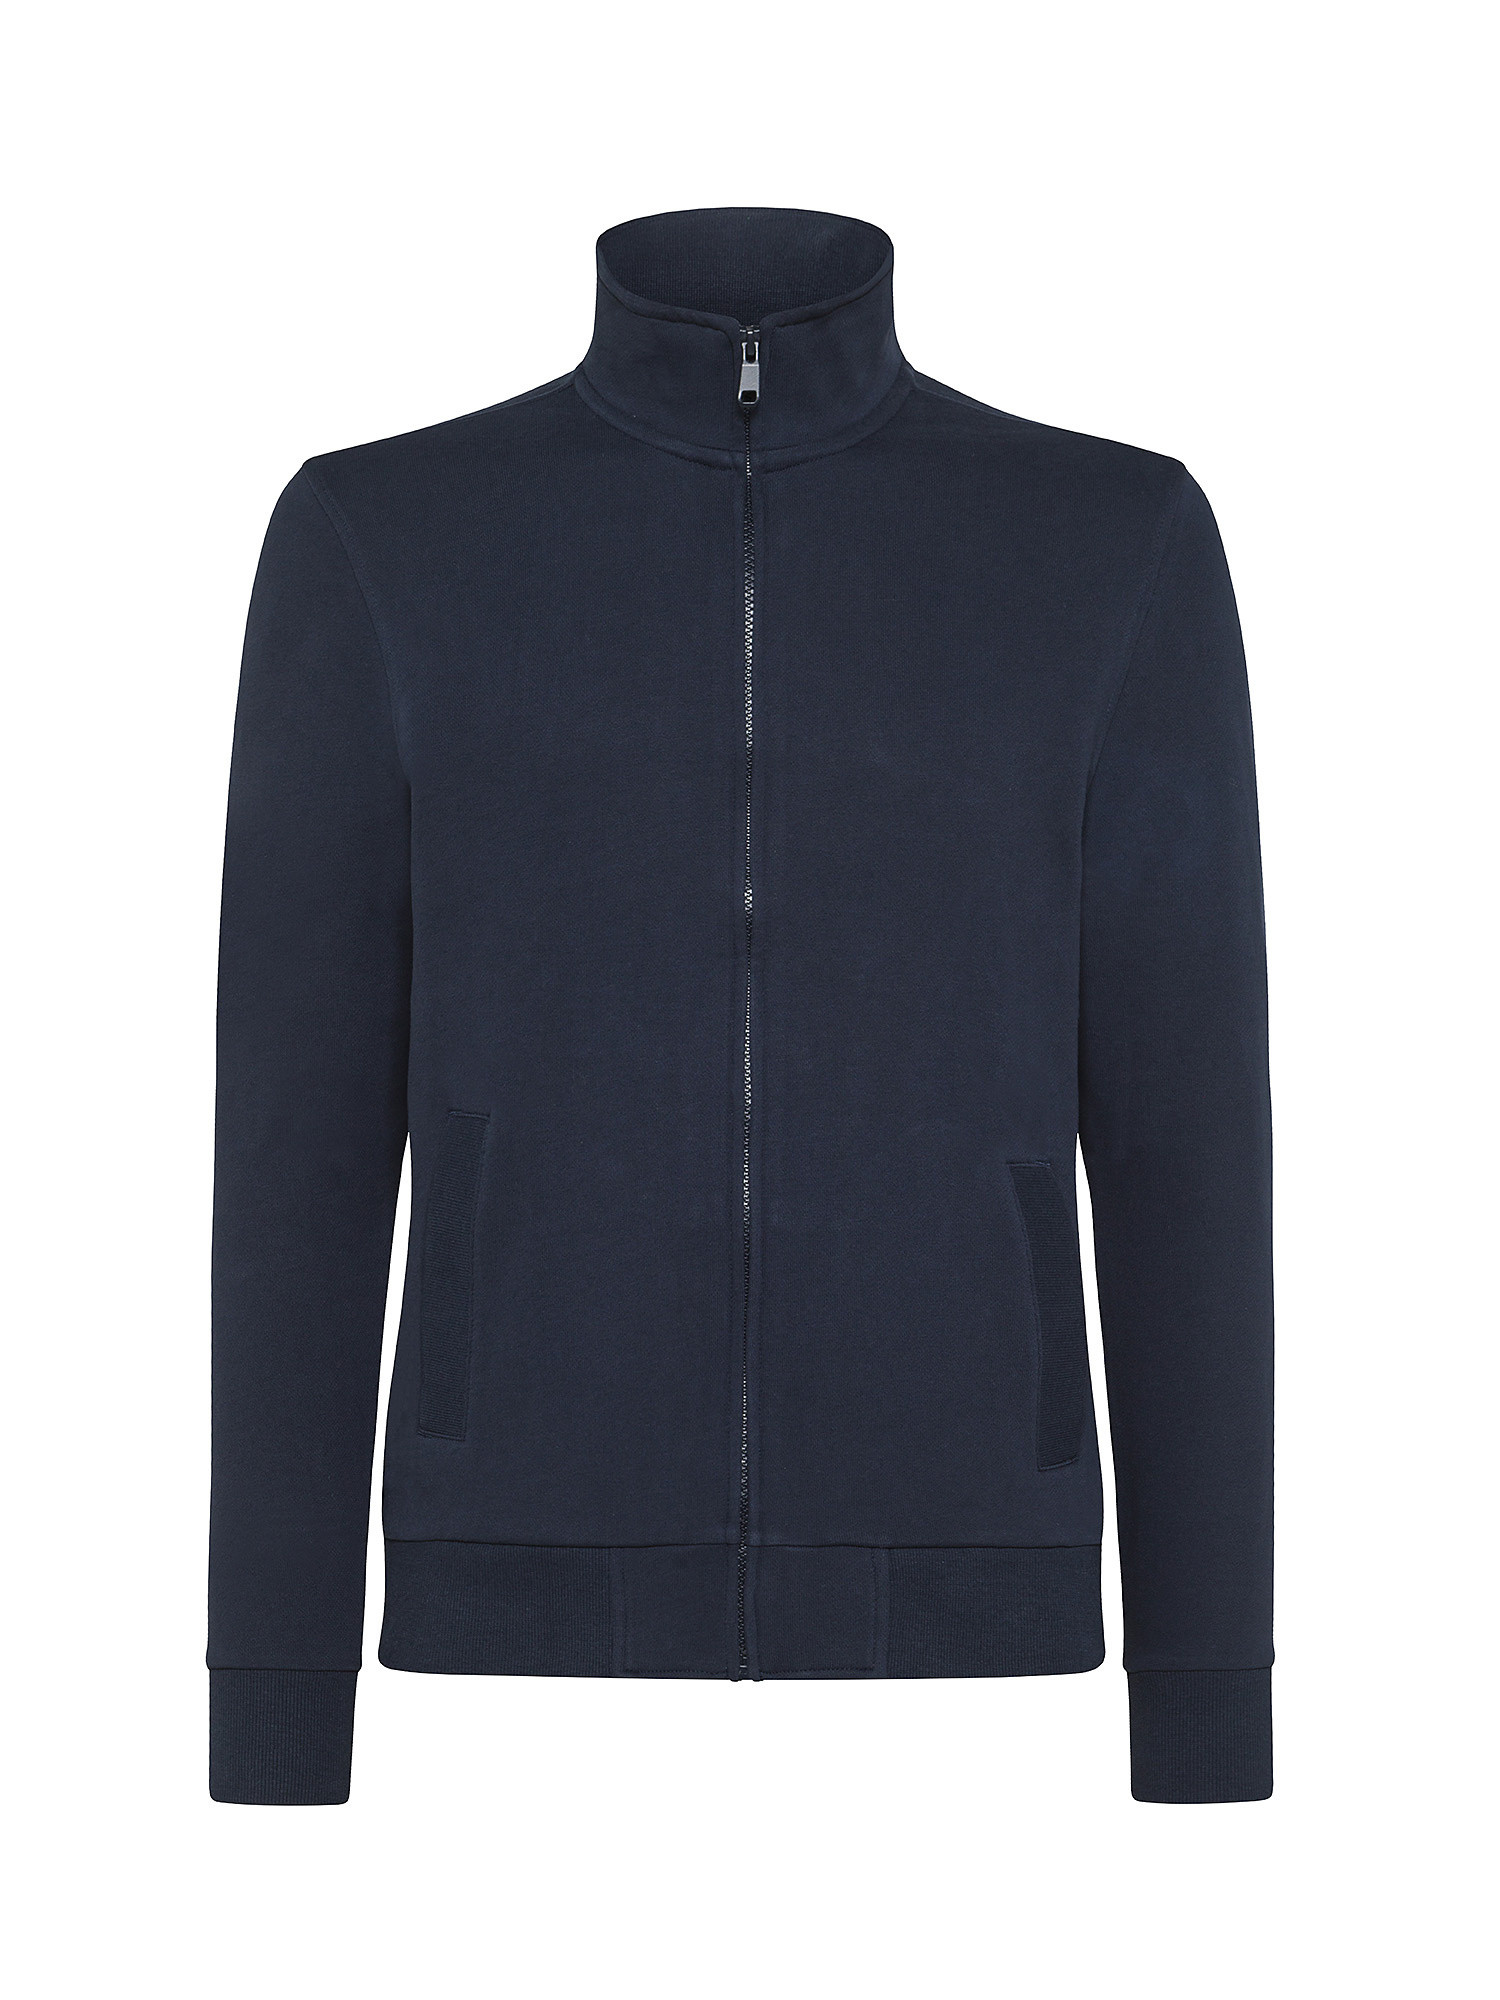 JCT - Full zip sweatshirt in pure cotton, Dark Blue, large image number 0